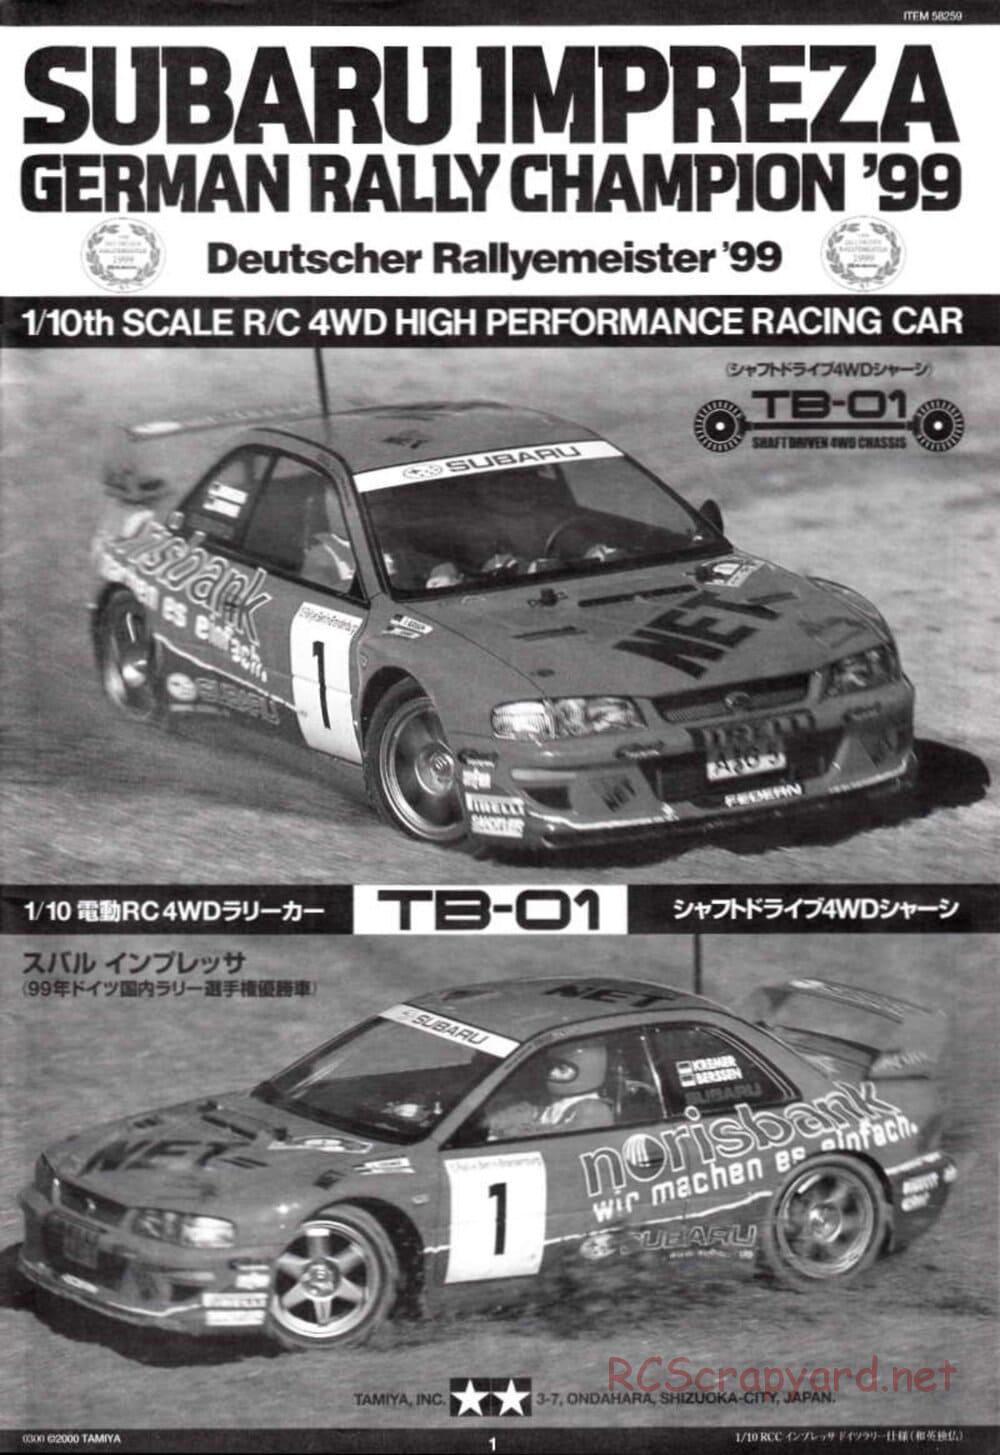 Tamiya - Subaru Impreza German Rally Champion 99 - TB-01 Chassis - Manual - Page 1